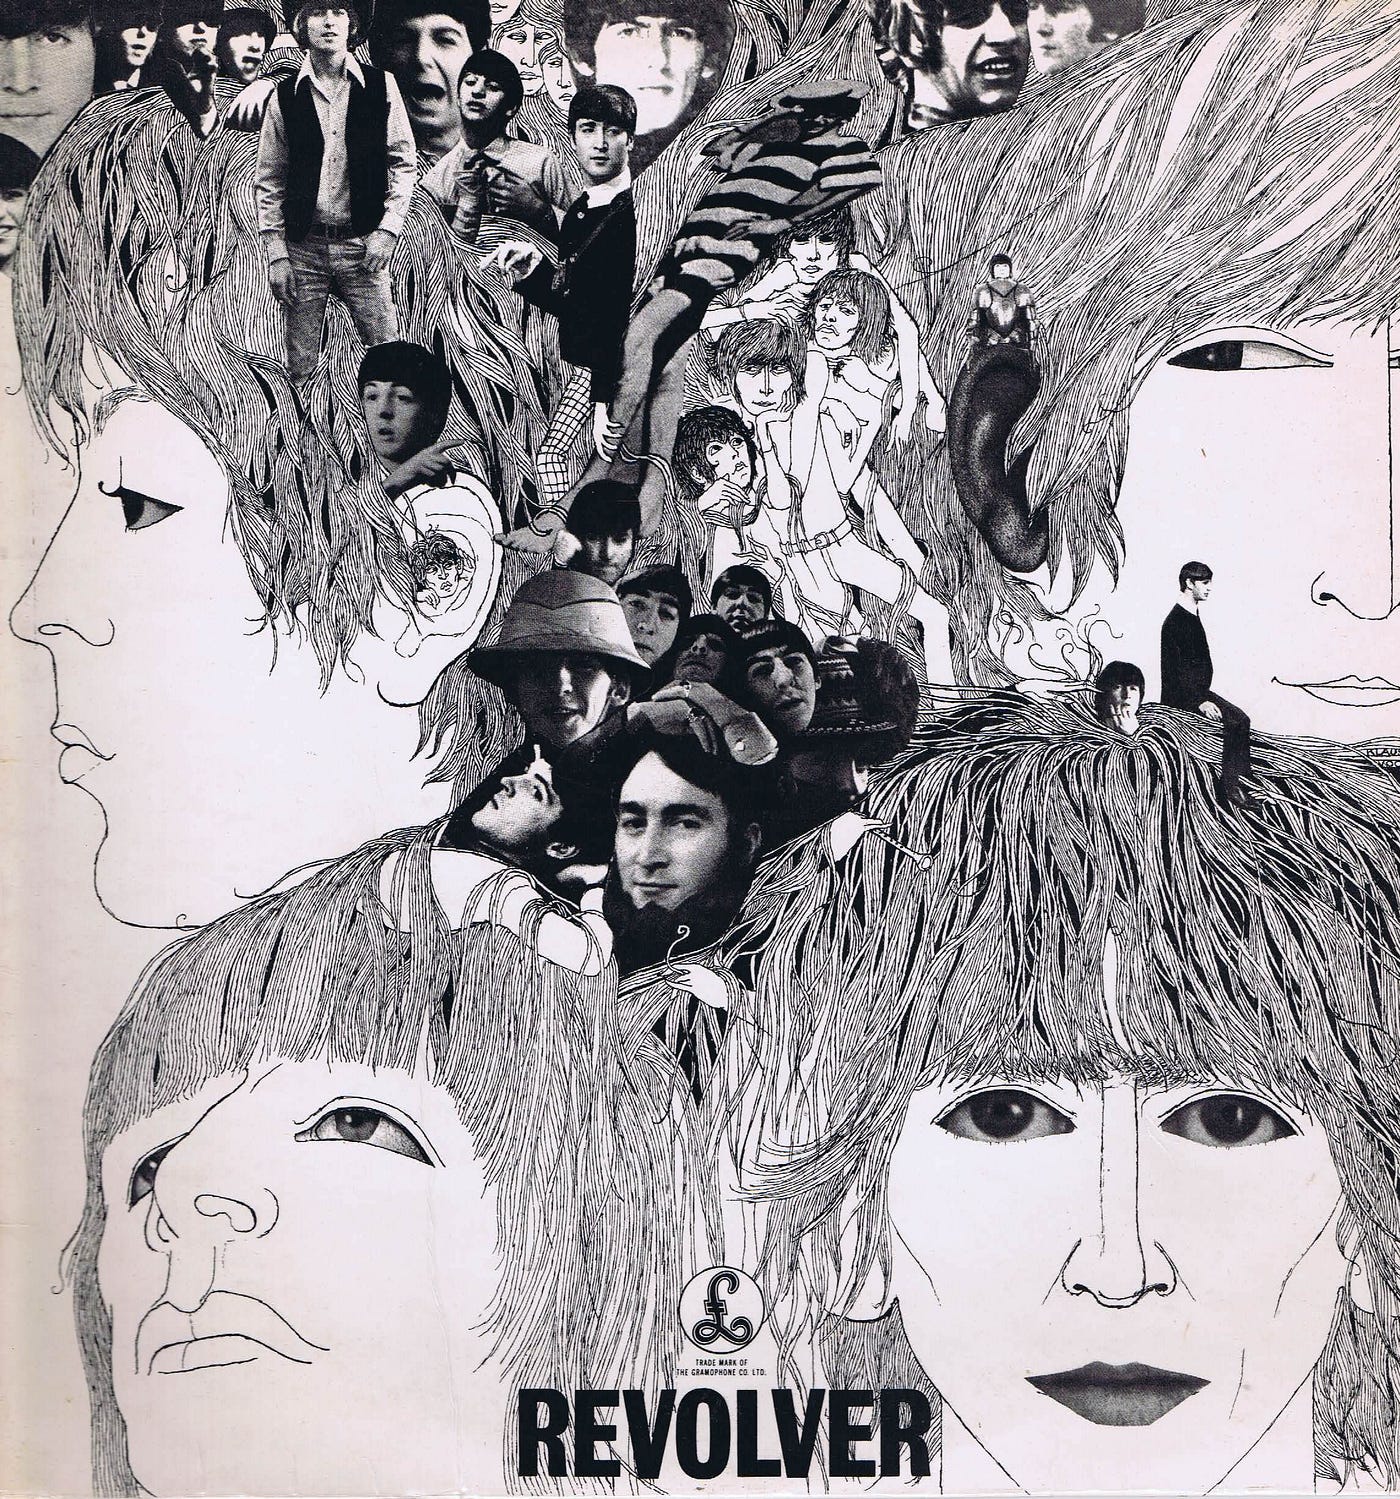 The cover of the Beatle’s album Revolver